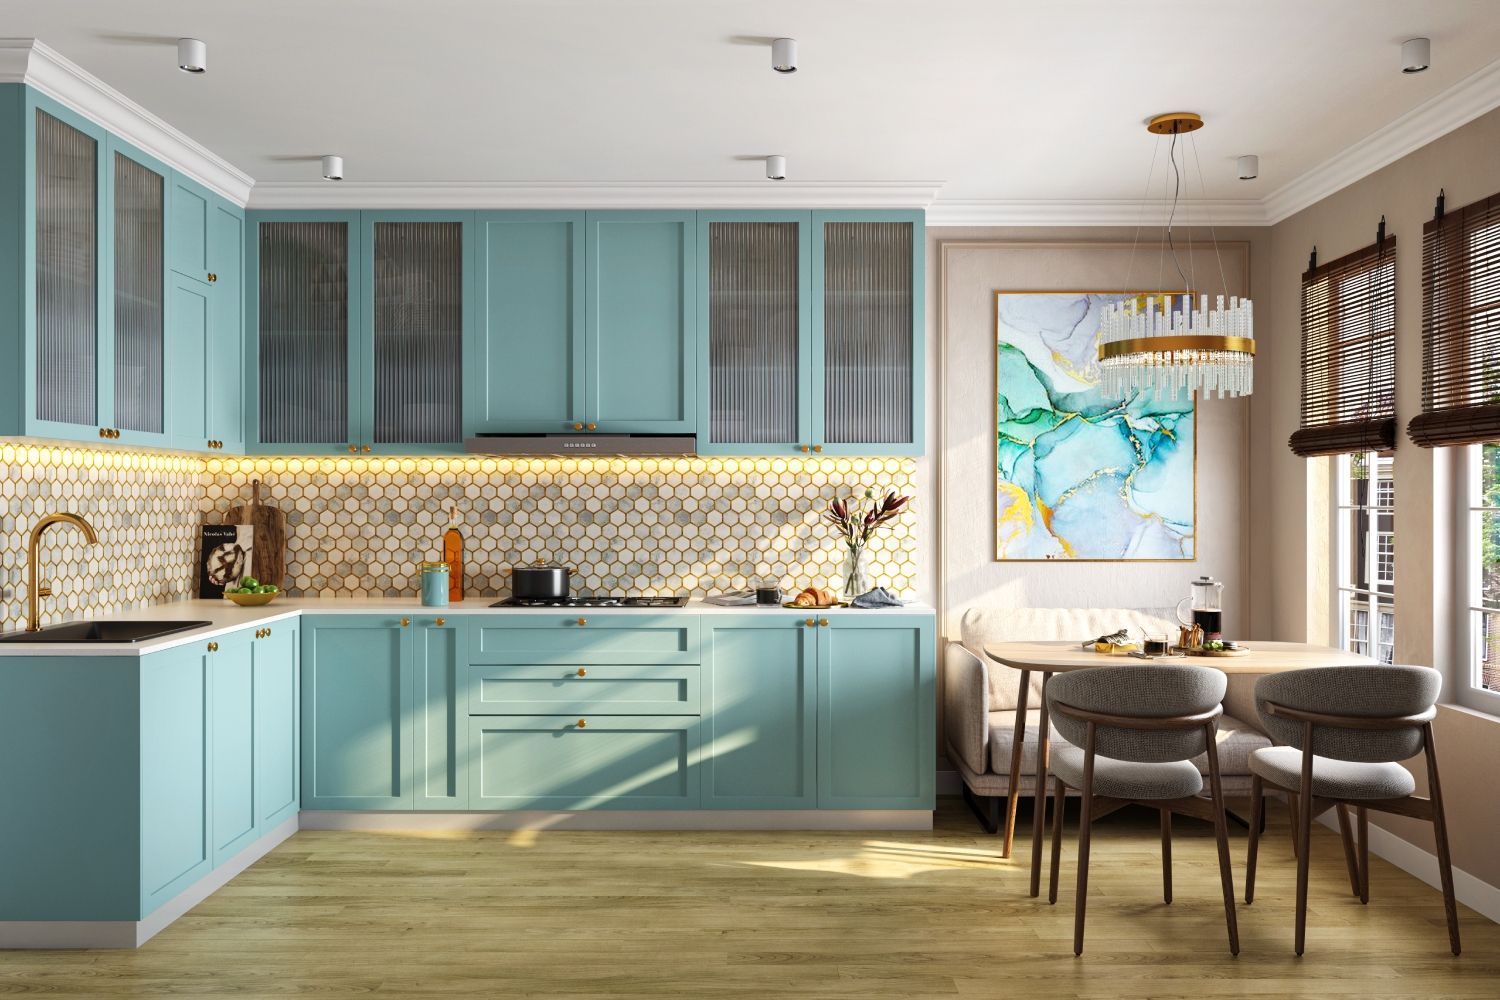 Contemporary Modular Blue Kitchen Cabinet Design With Hexagonal Dado Kitchen Tile Patterns